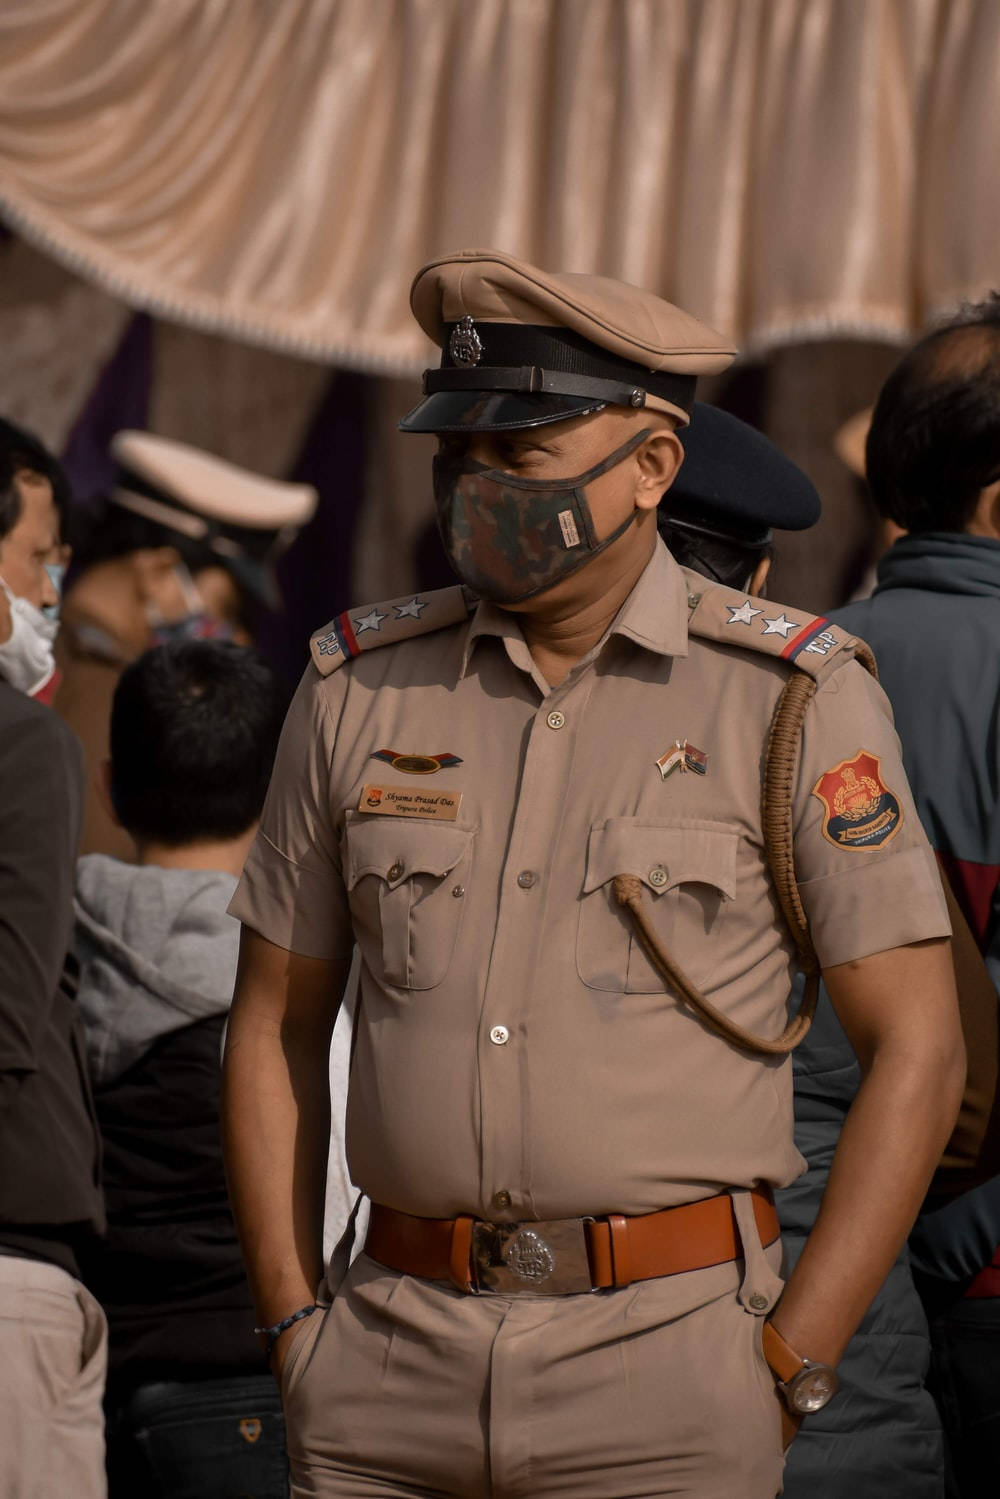 Caption: Indian Police Commander In Uniform